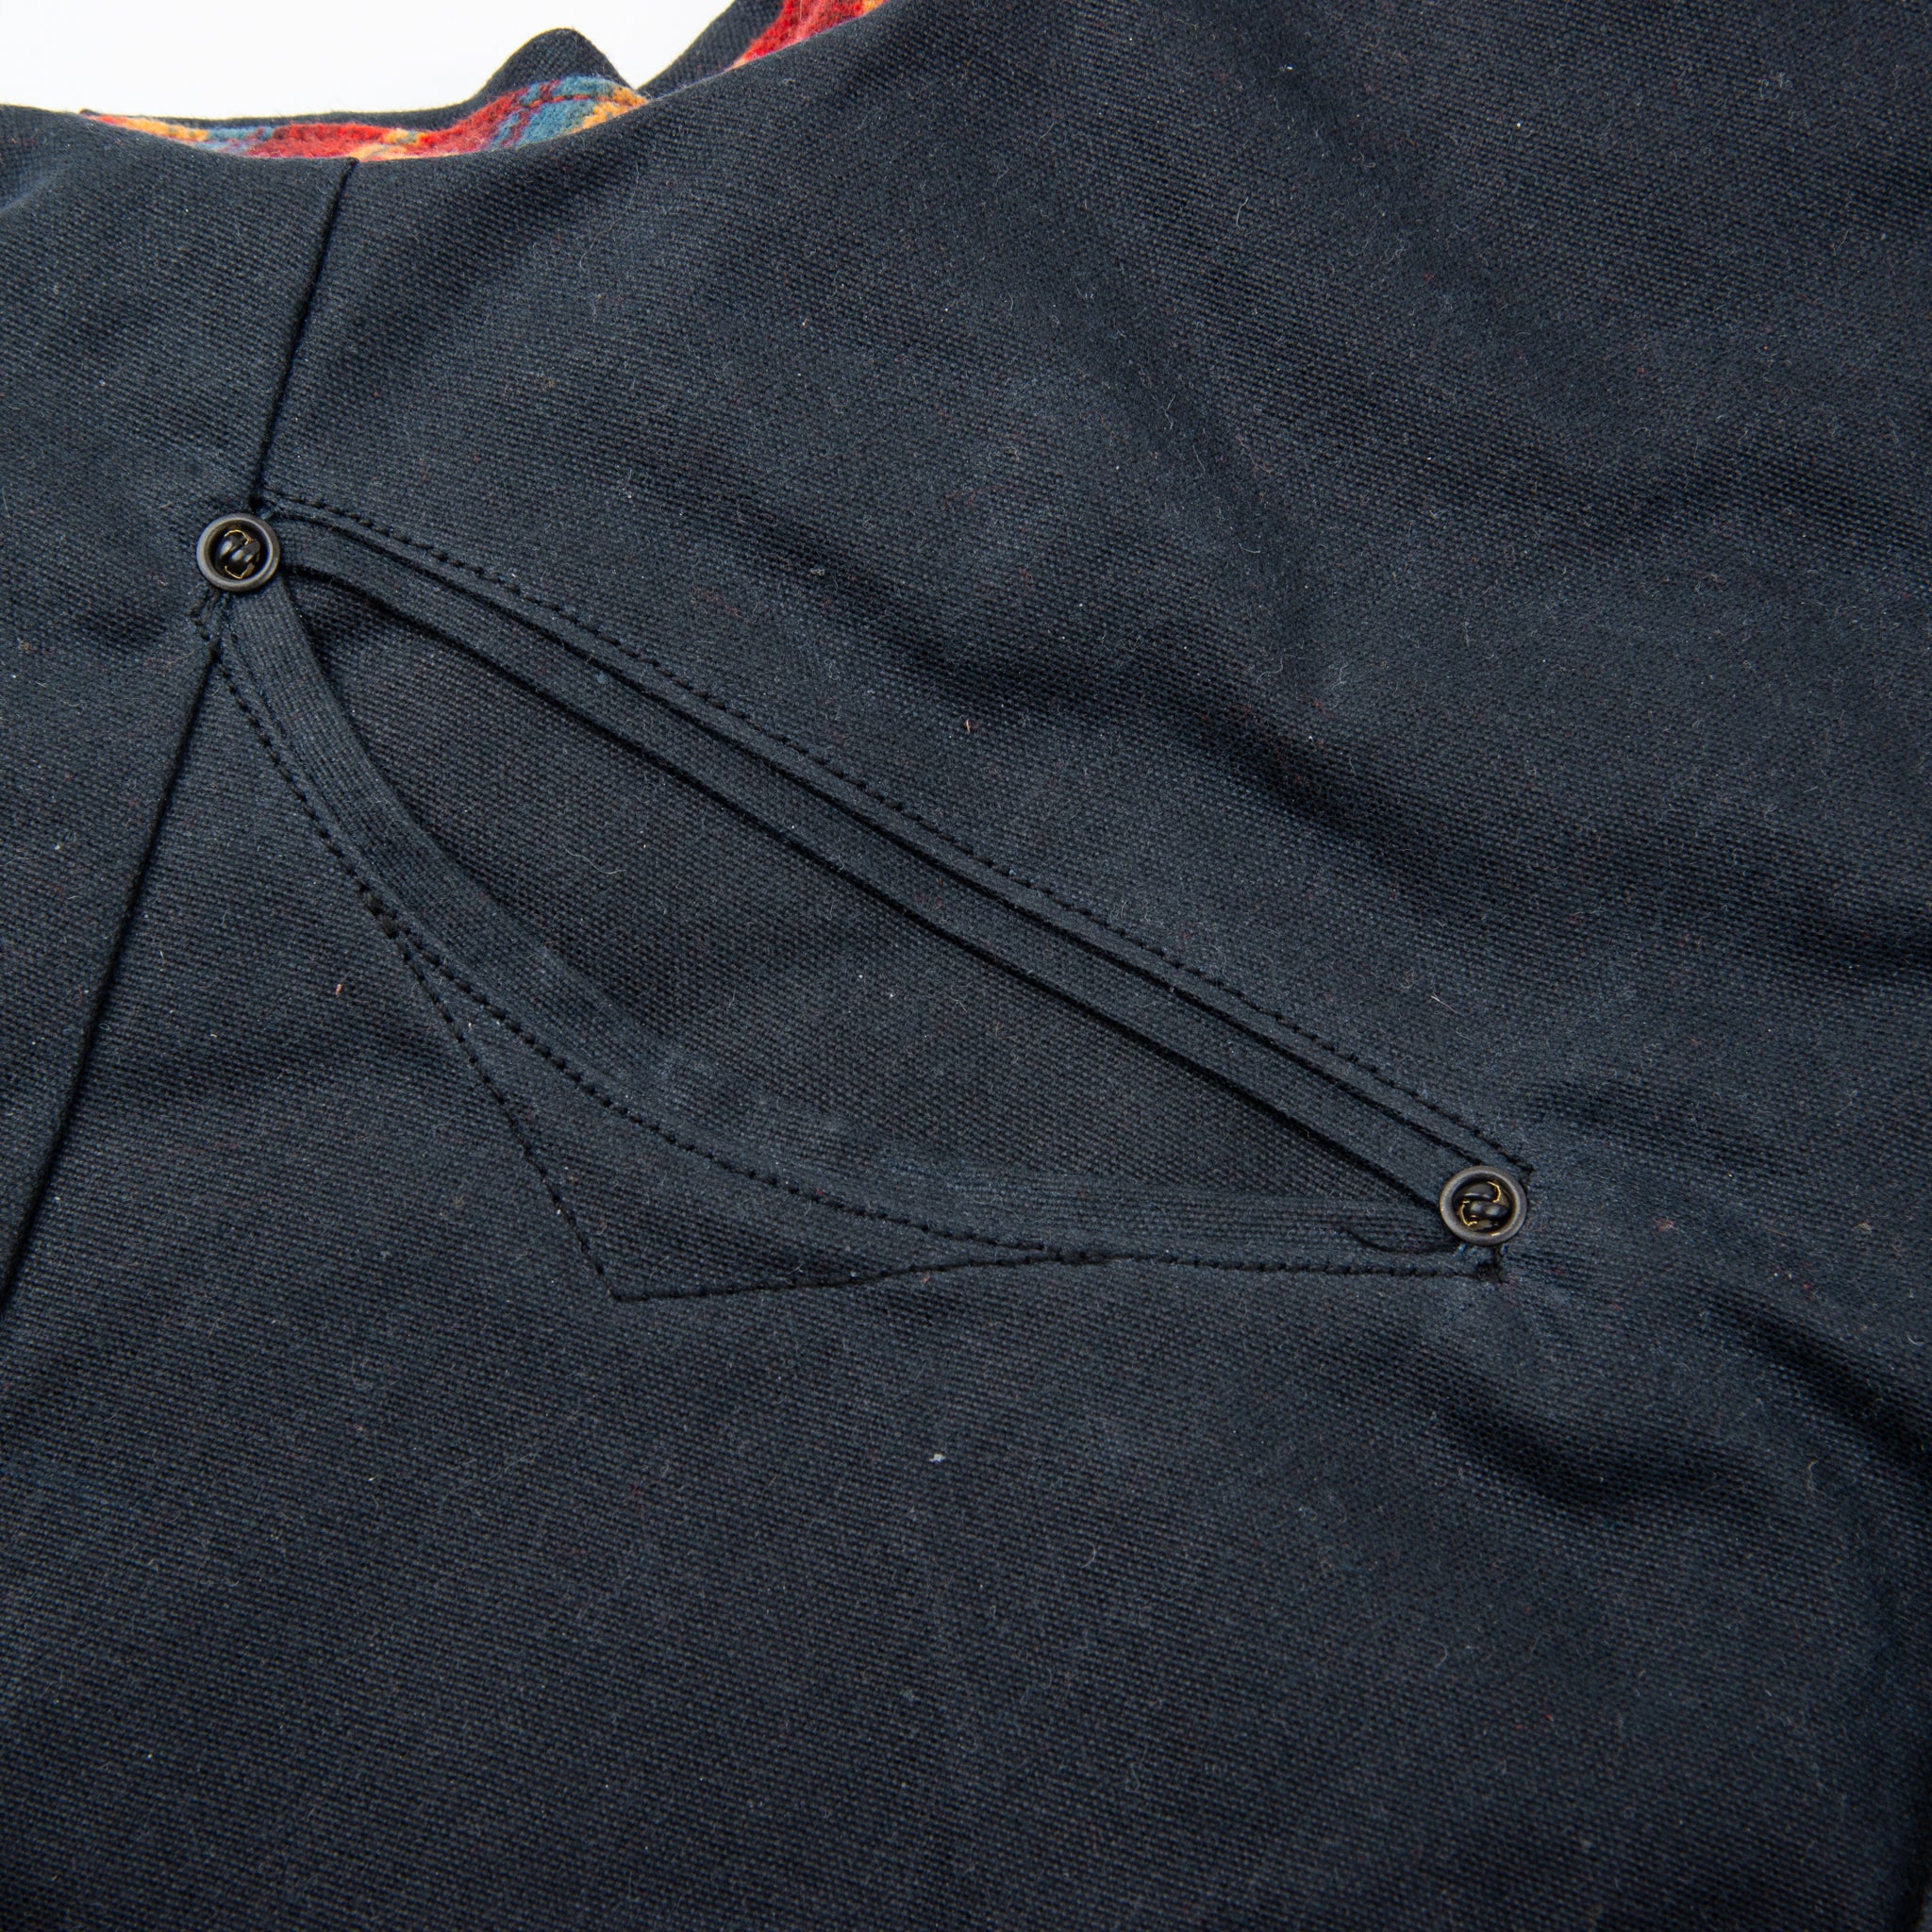 Calico Vest Waxed Canvas <span> Black </span>